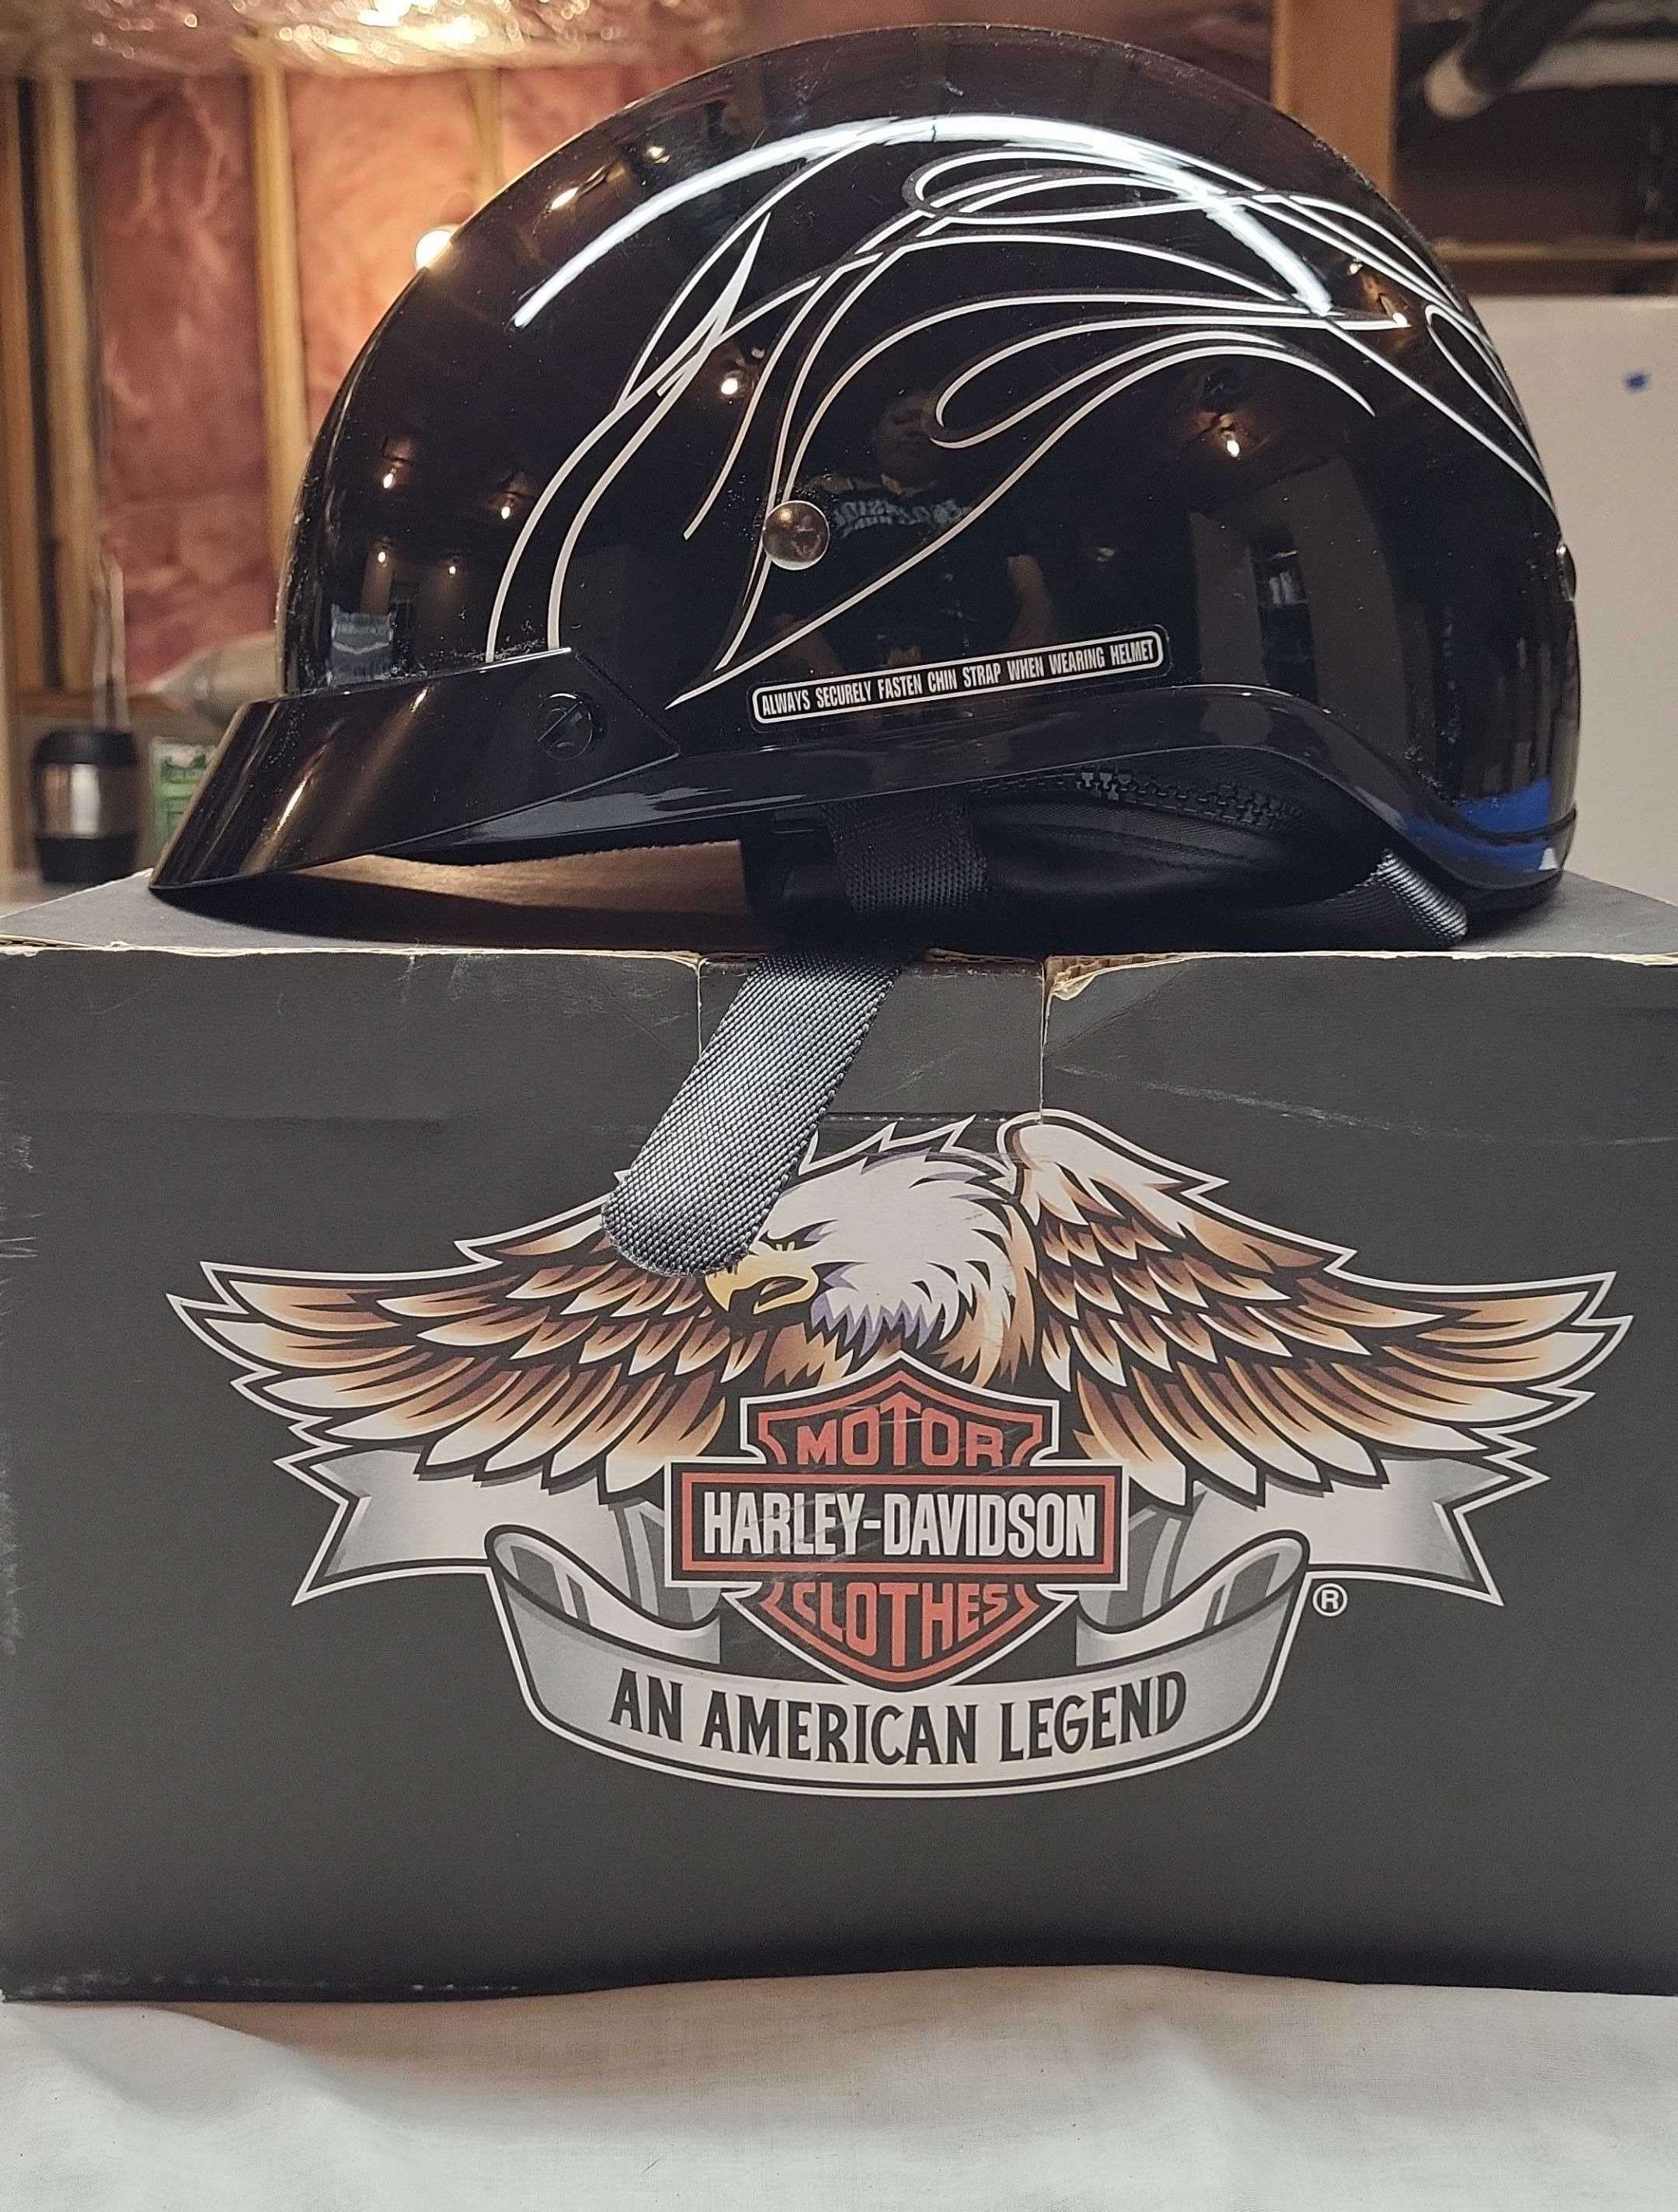 Harley-Davidson® Women's FXRG Black Leather Jacket, Riding Biker. 98034-12VW